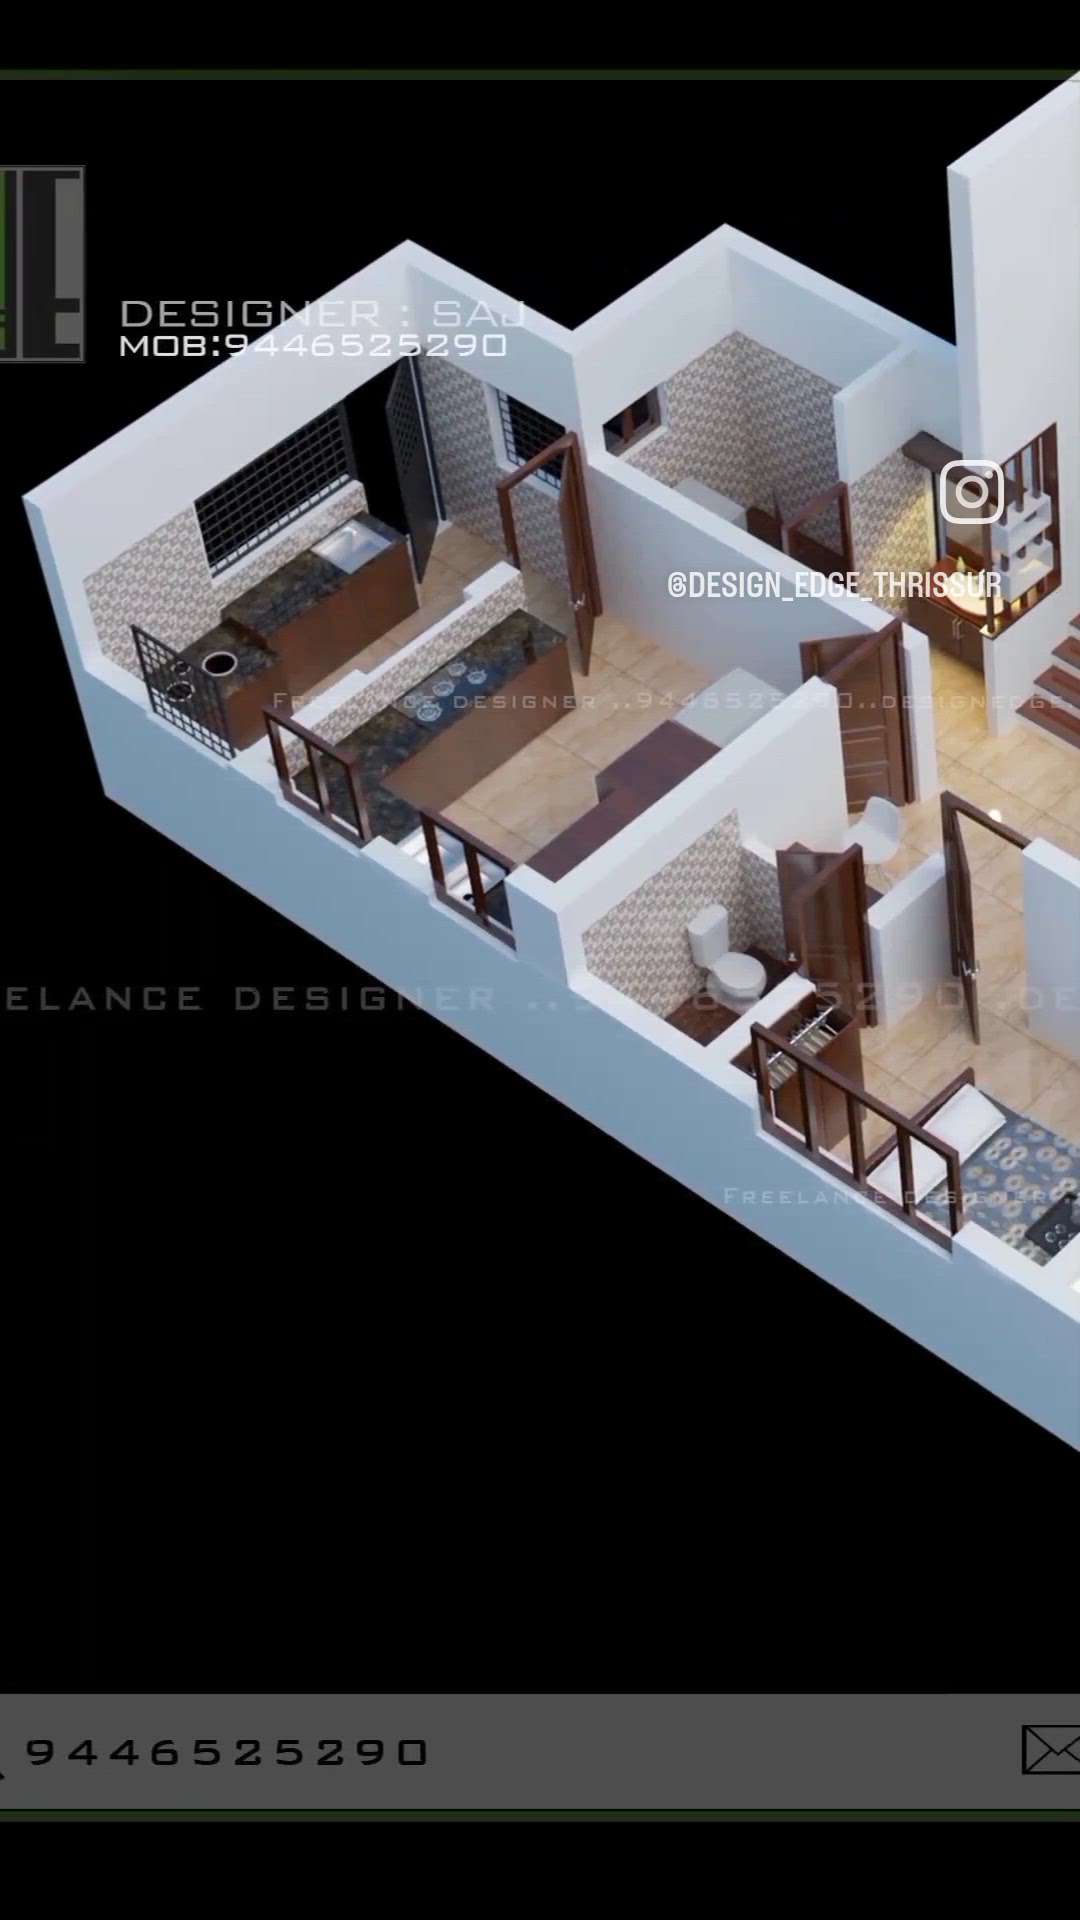 3d section with furniture layout

2/- per sqft 
pls contact 9446525290 #FloorPlans #3Dfloorplans #designedgethrissur #3dfreelancedesigner